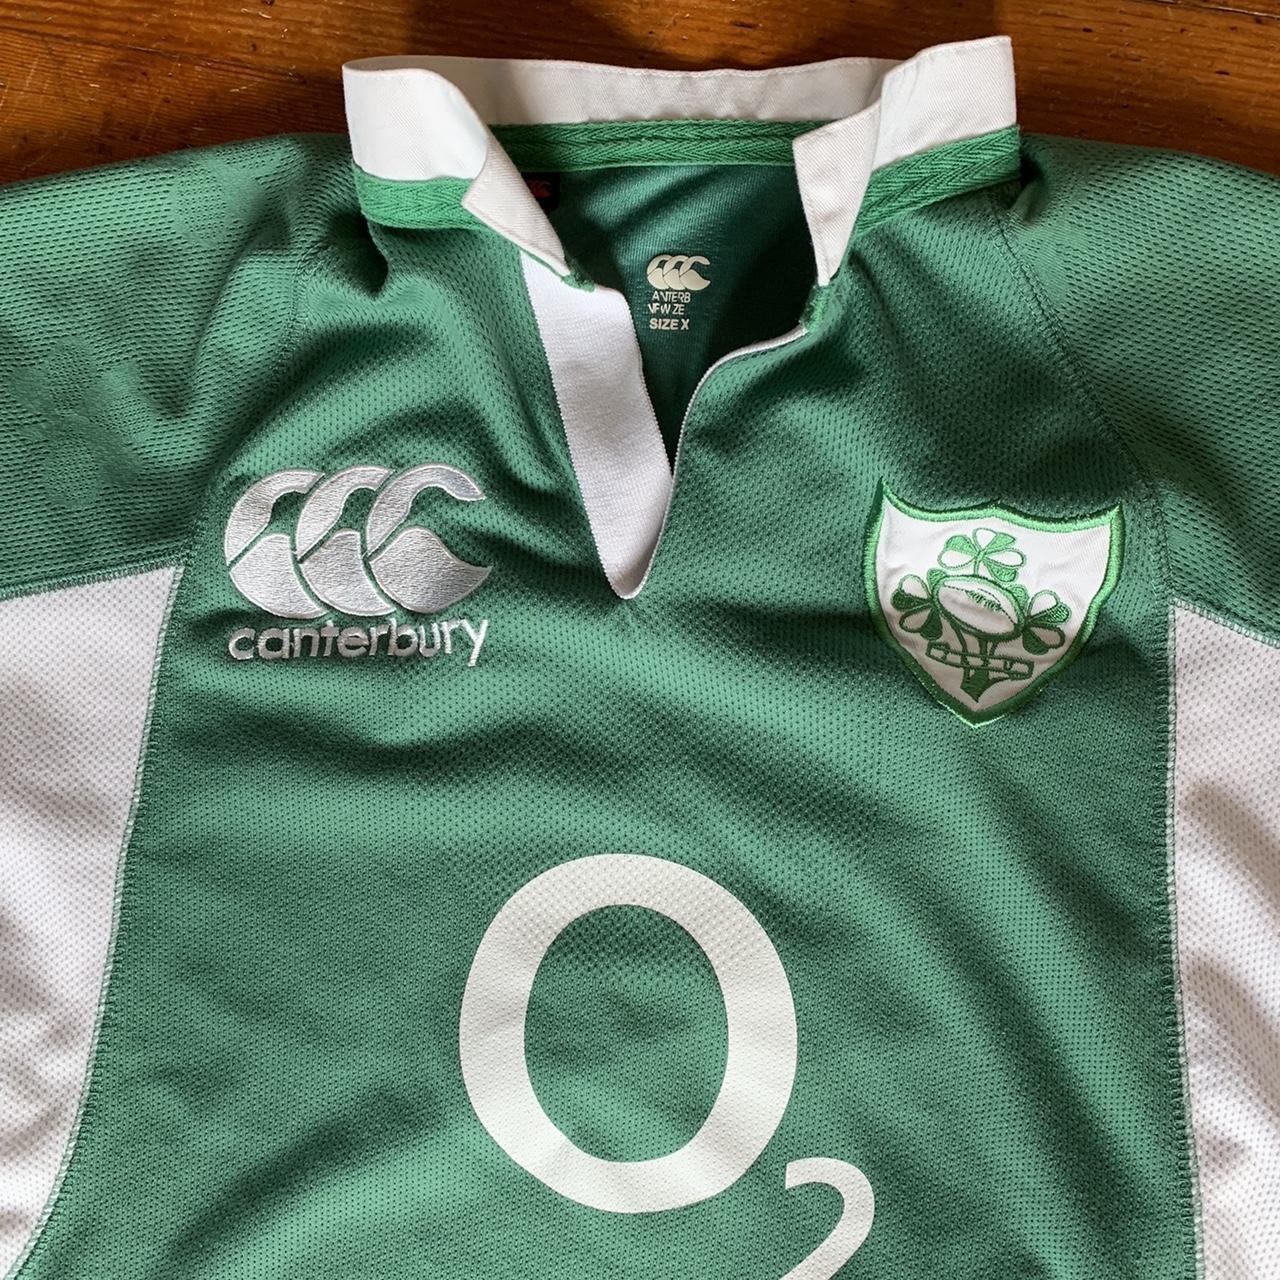 Canterbury Men's Green and White Shirt (2)